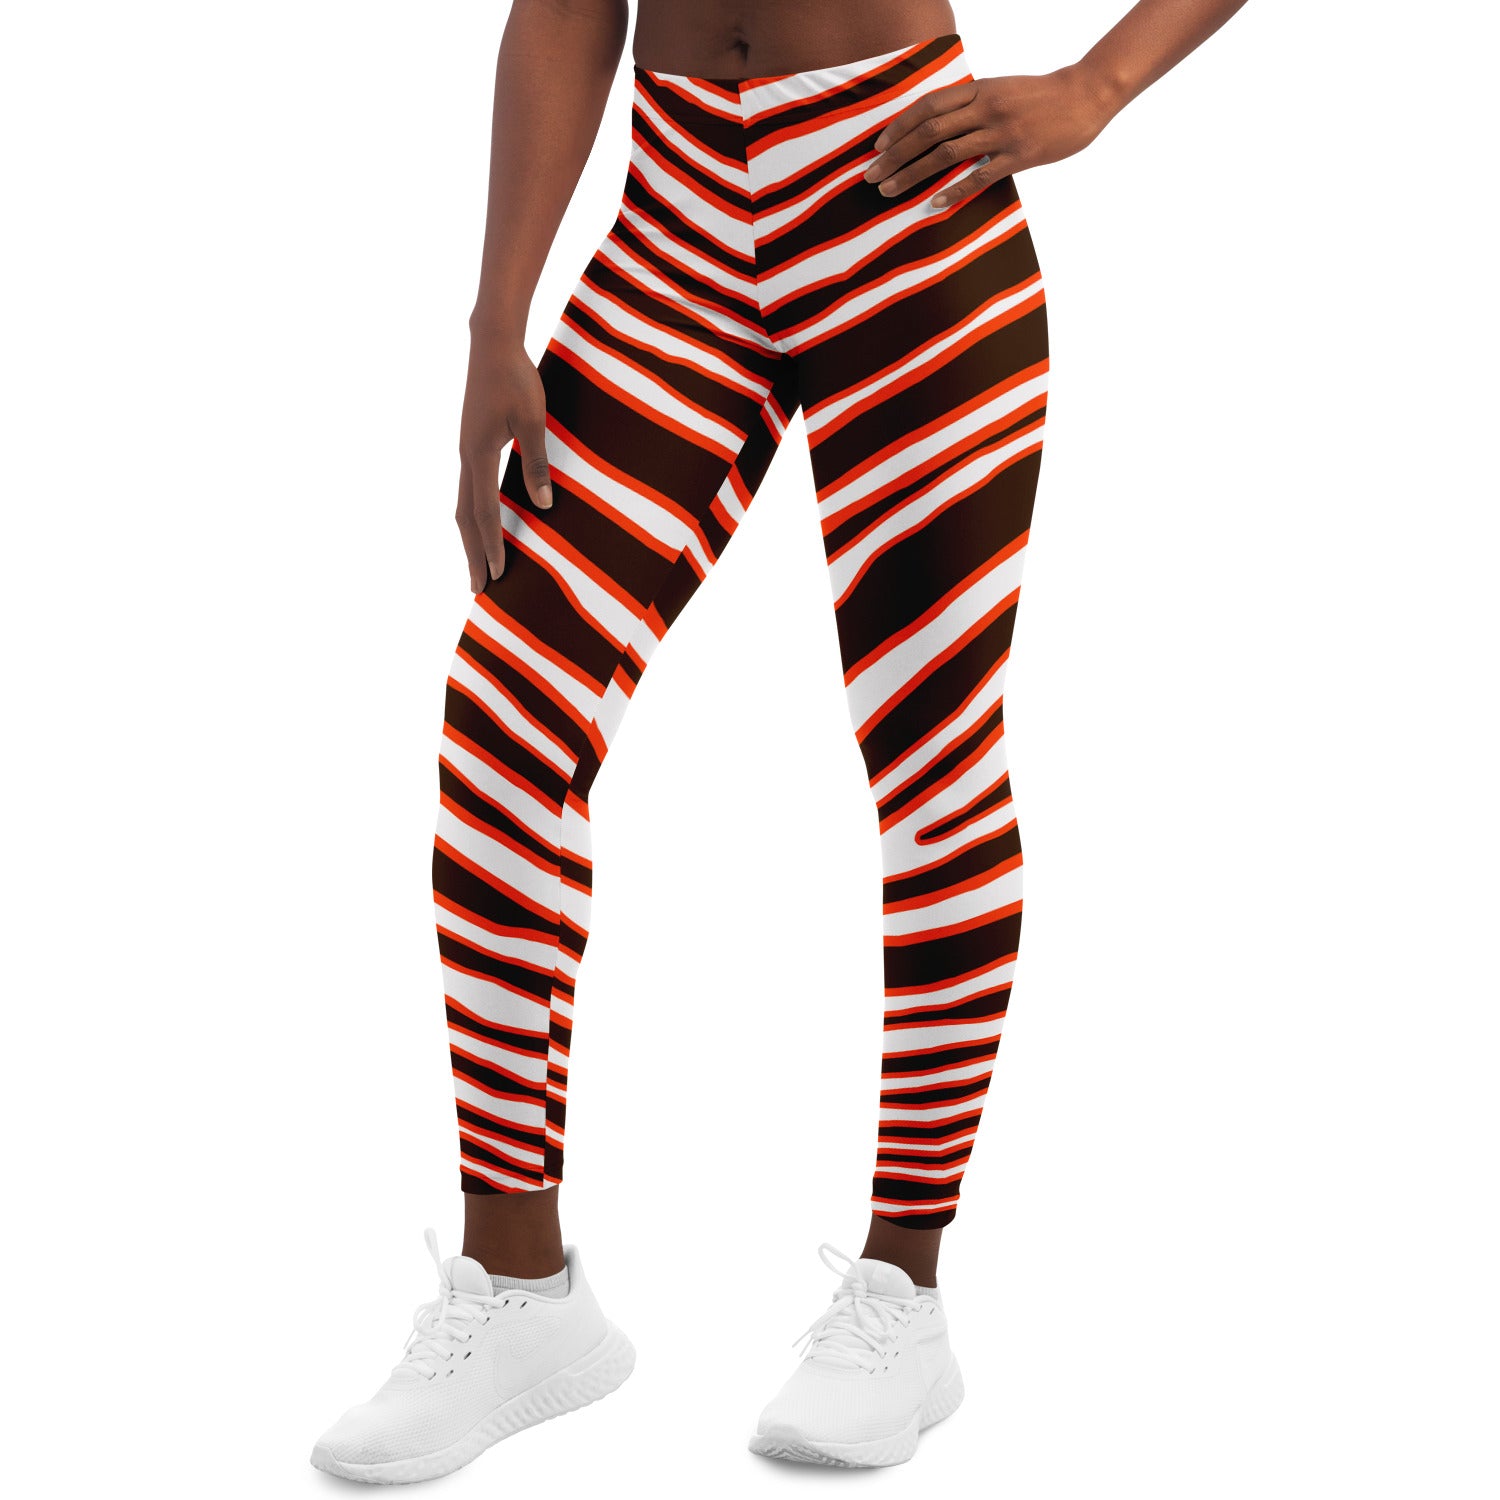 Cleveland Zebra Stripe Leggings